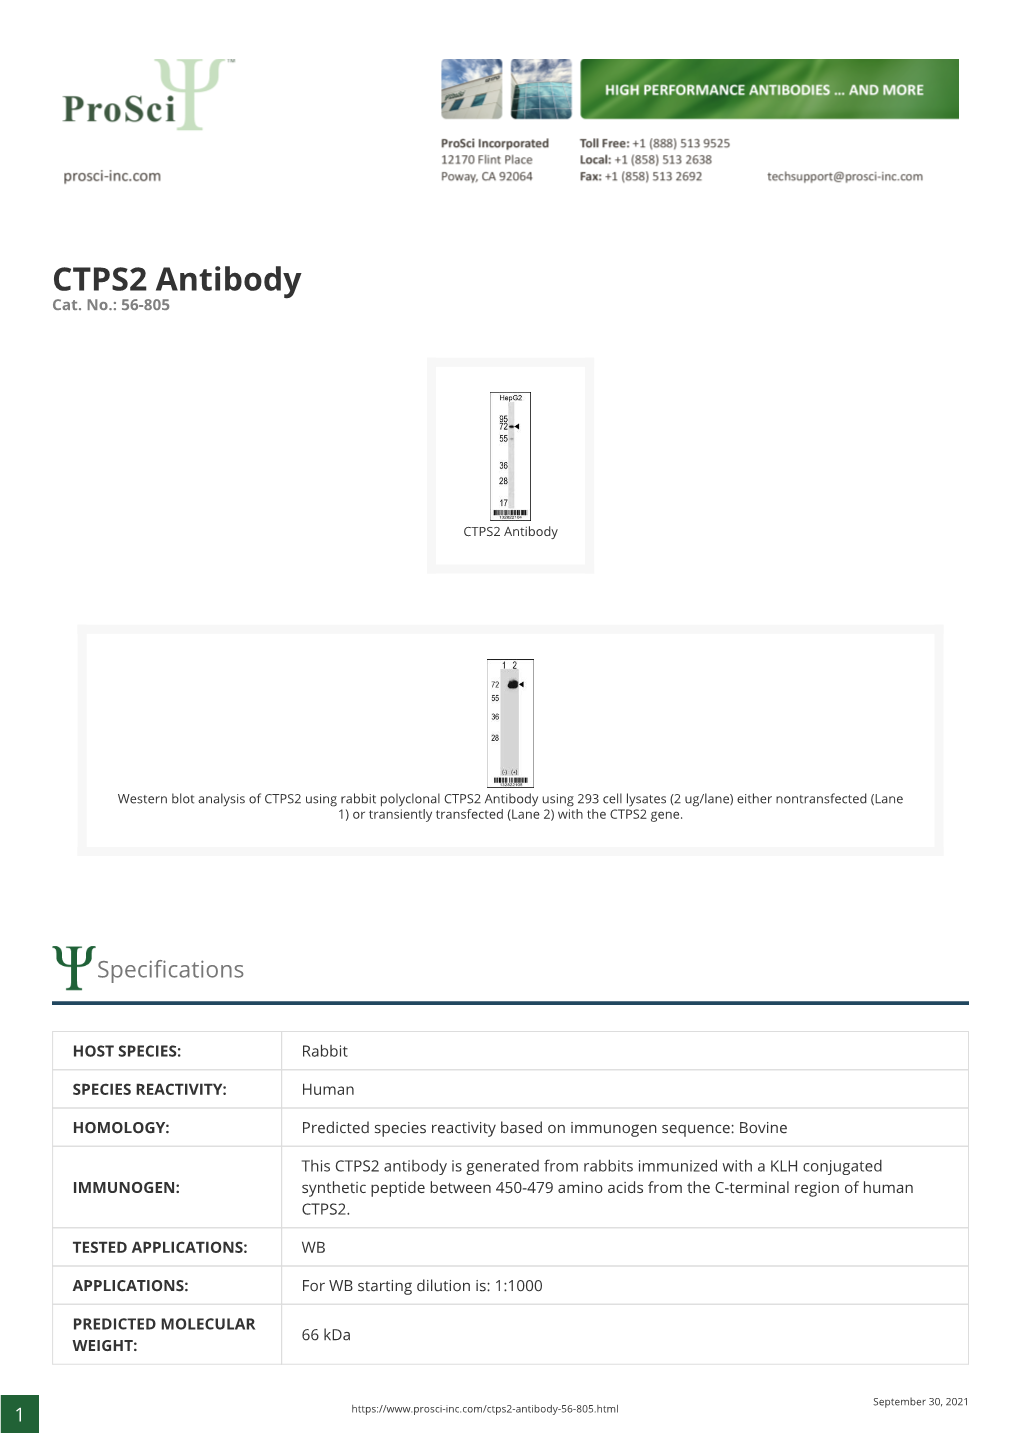 CTPS2 Antibody Cat